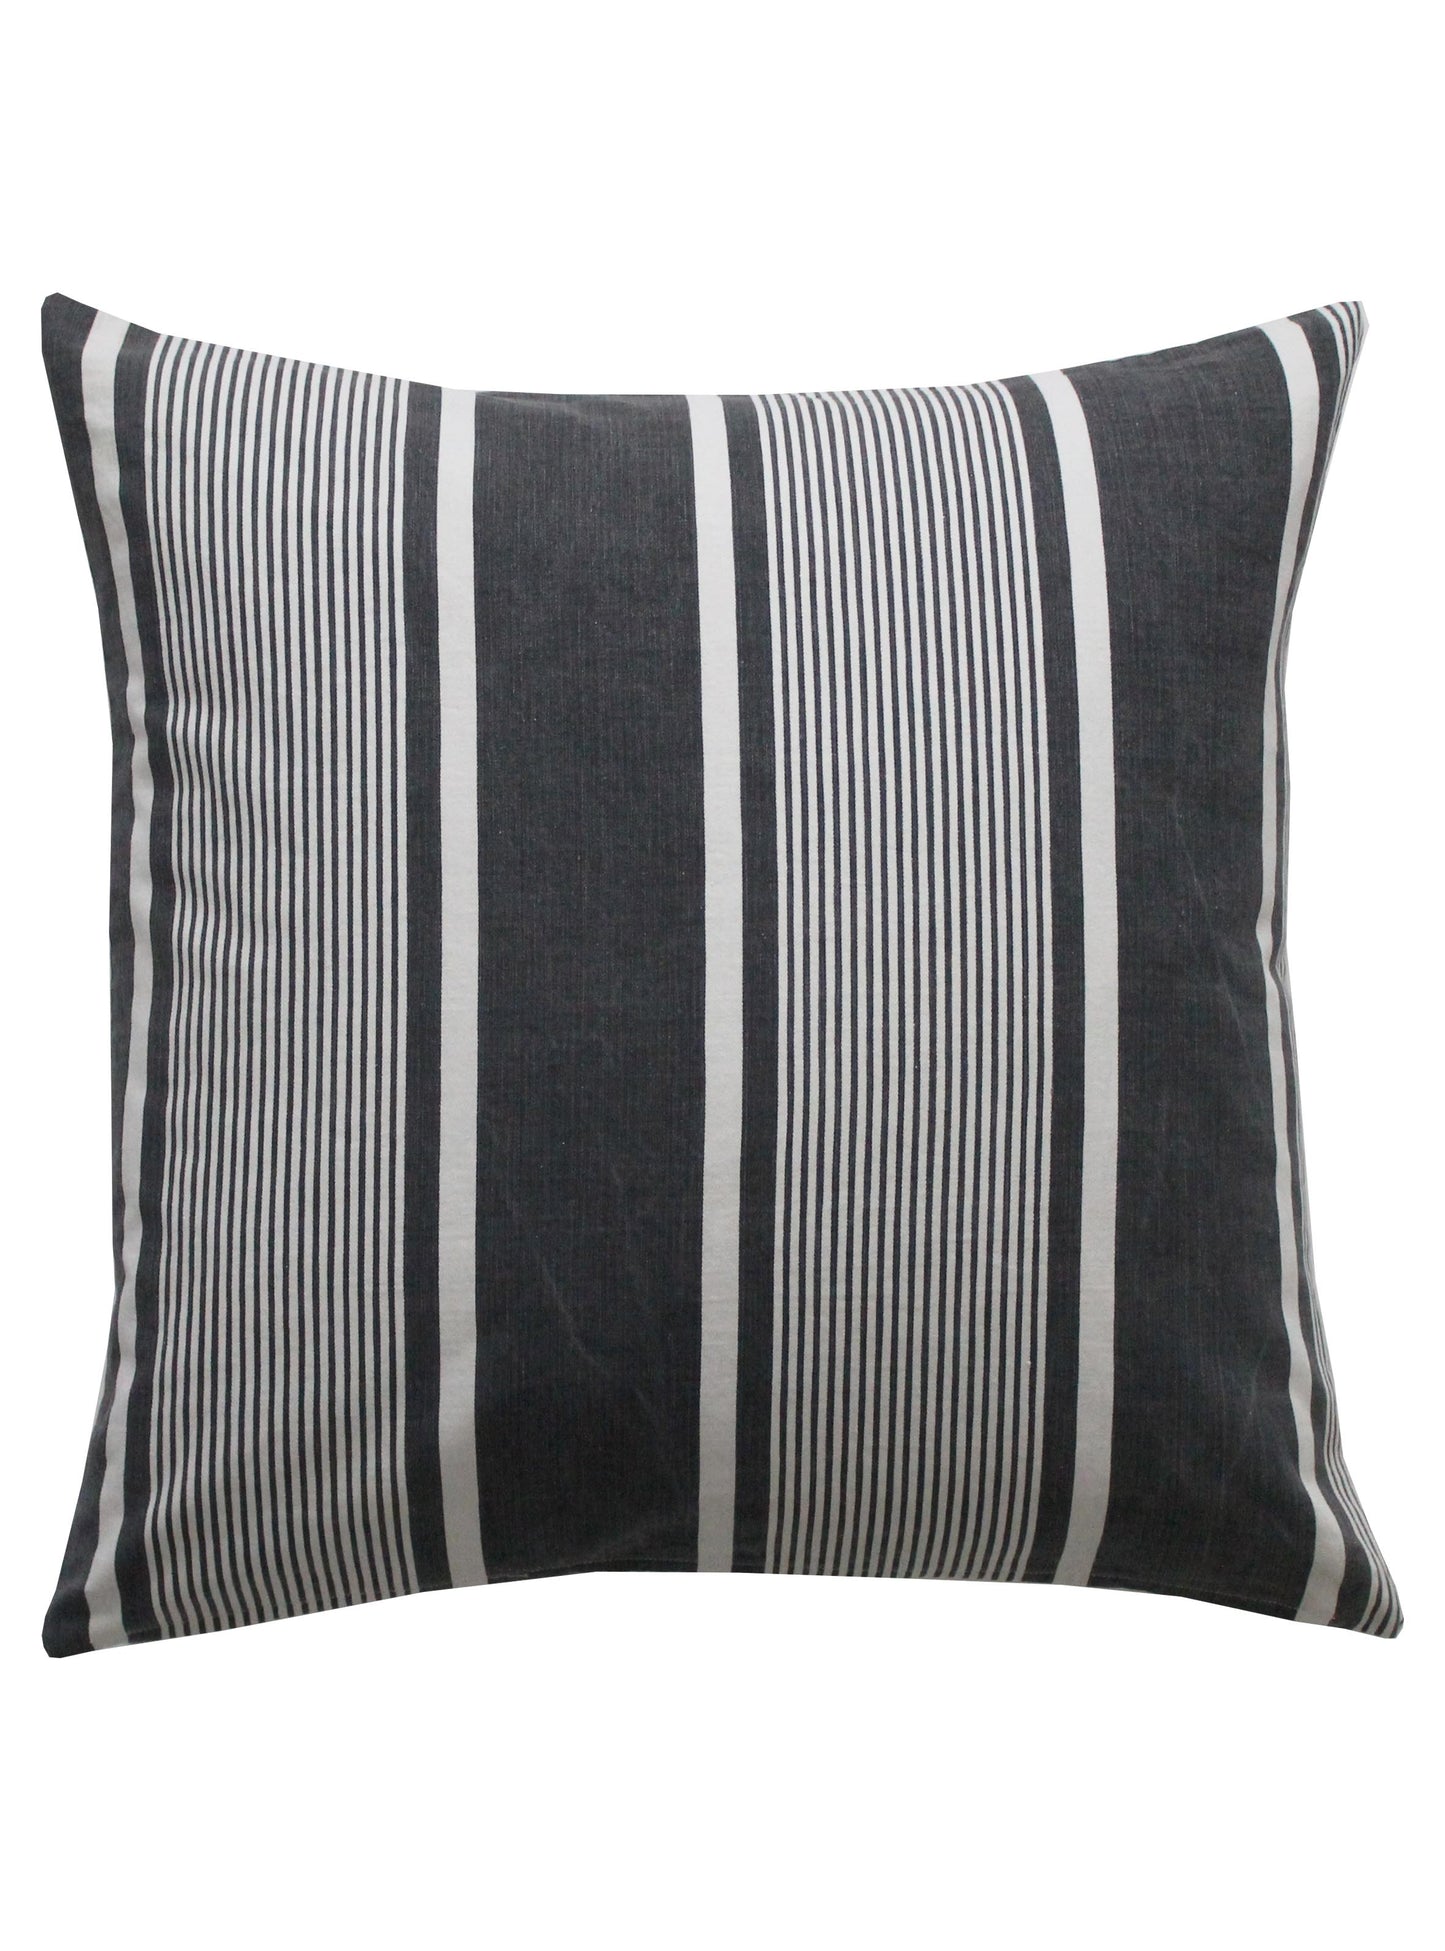 Black and White Stripe Square Cushion